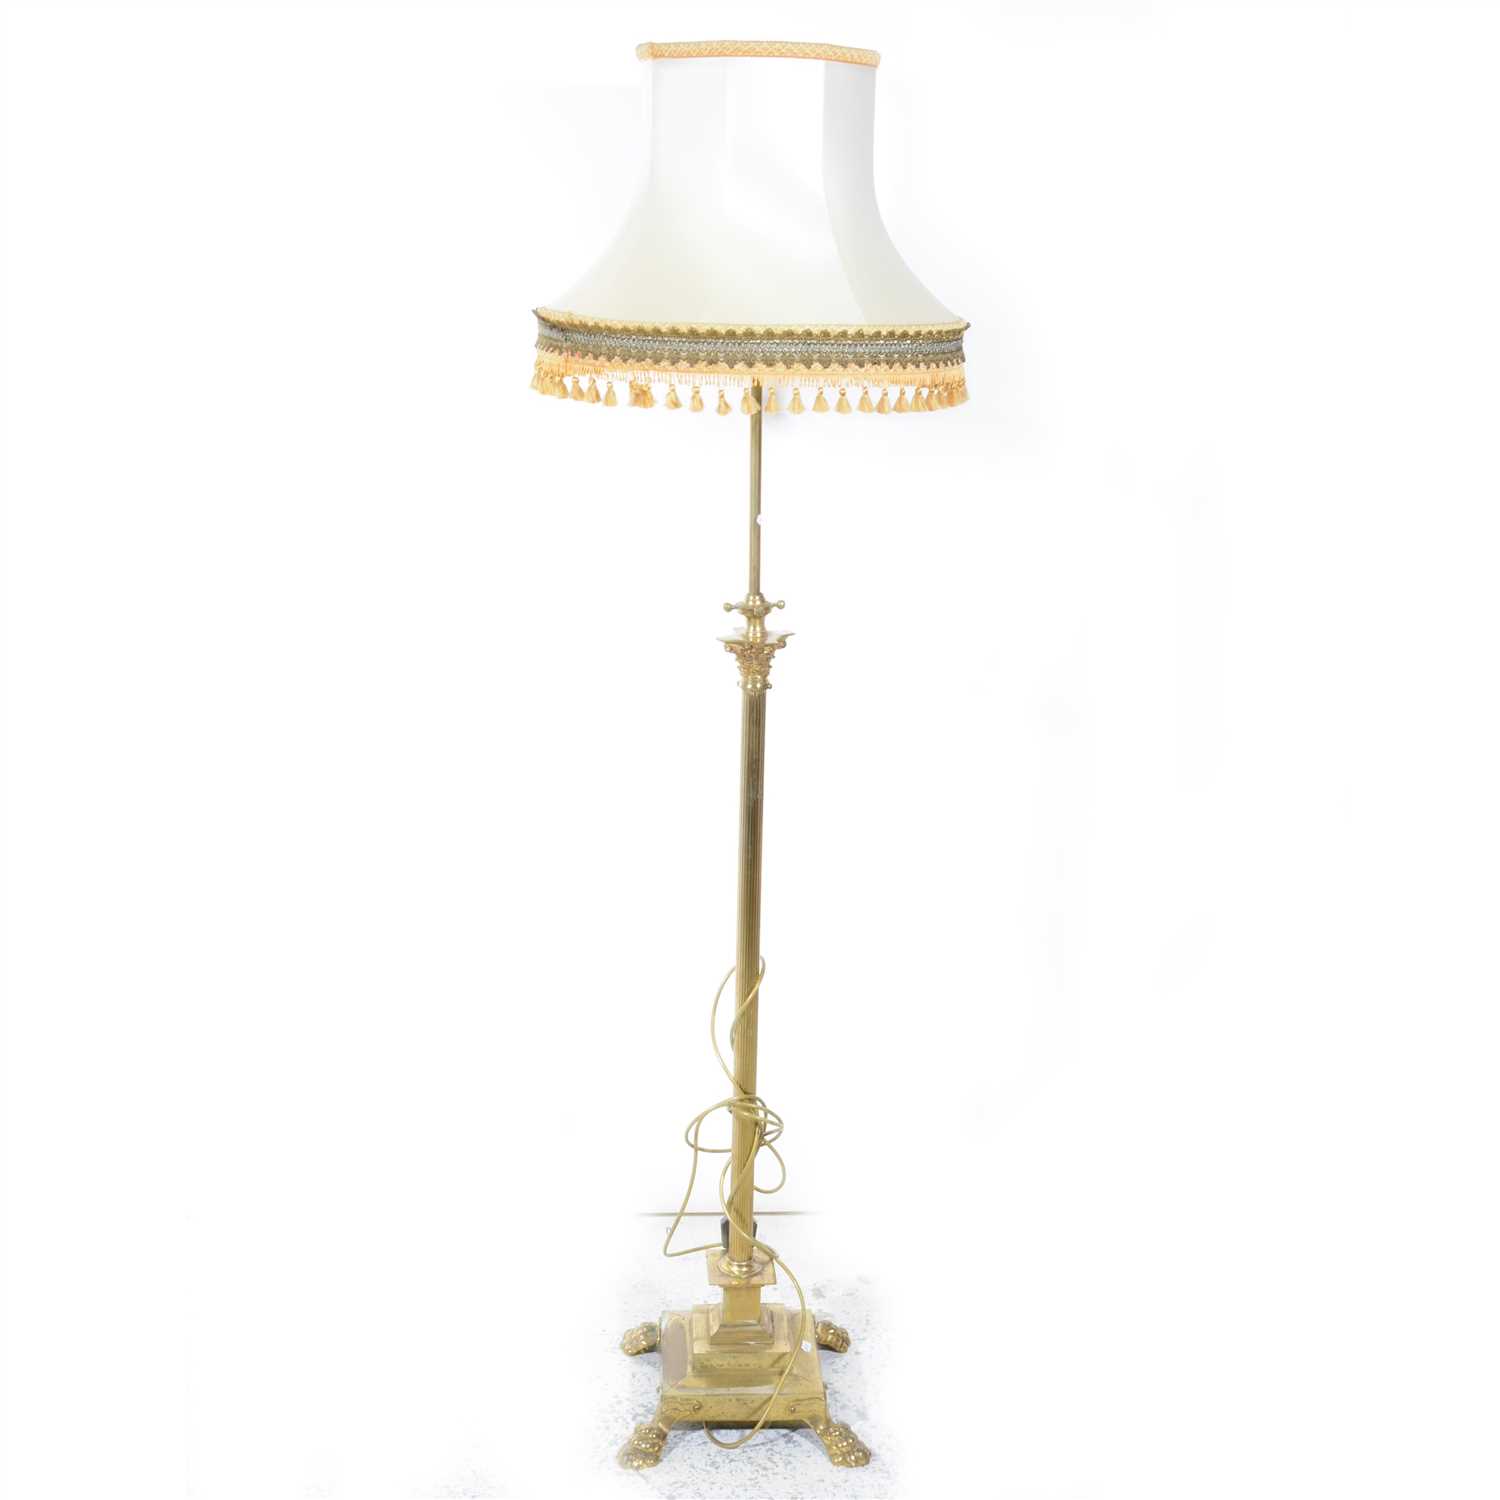 Lot 358 - Brass Corinthian column adjustable standard lamp.